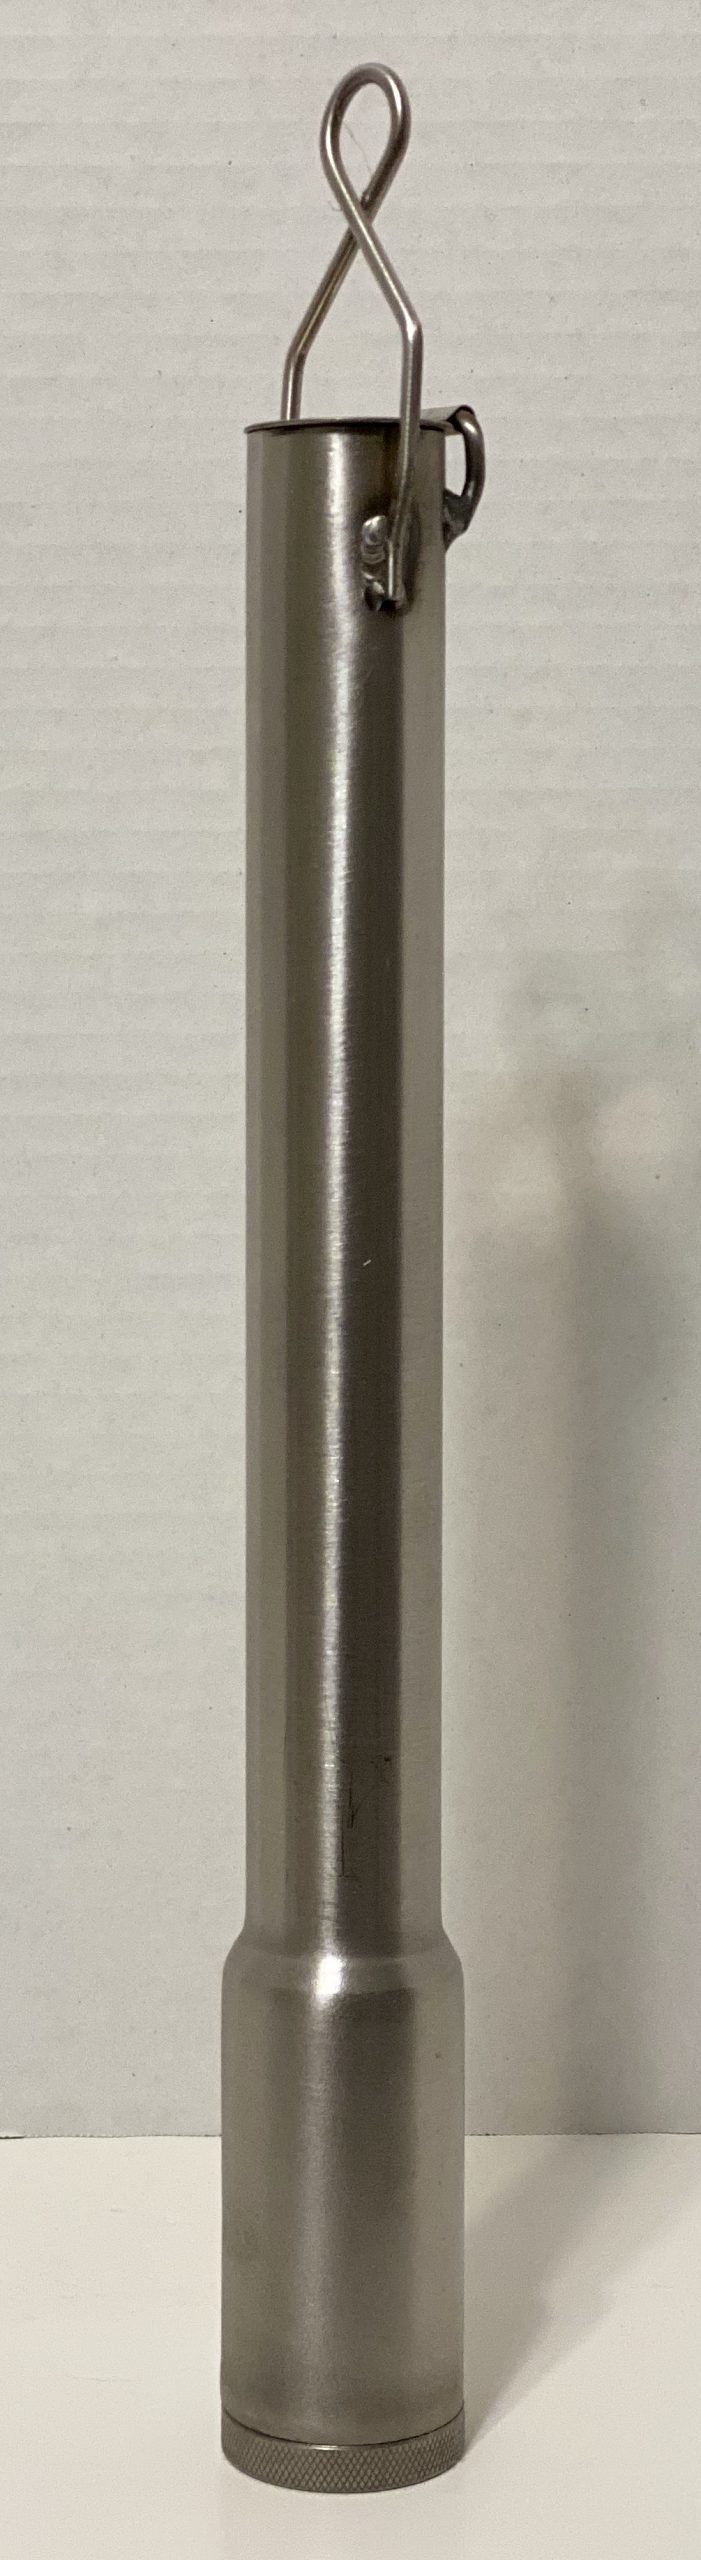 Stainless Pencil Zone Sampler